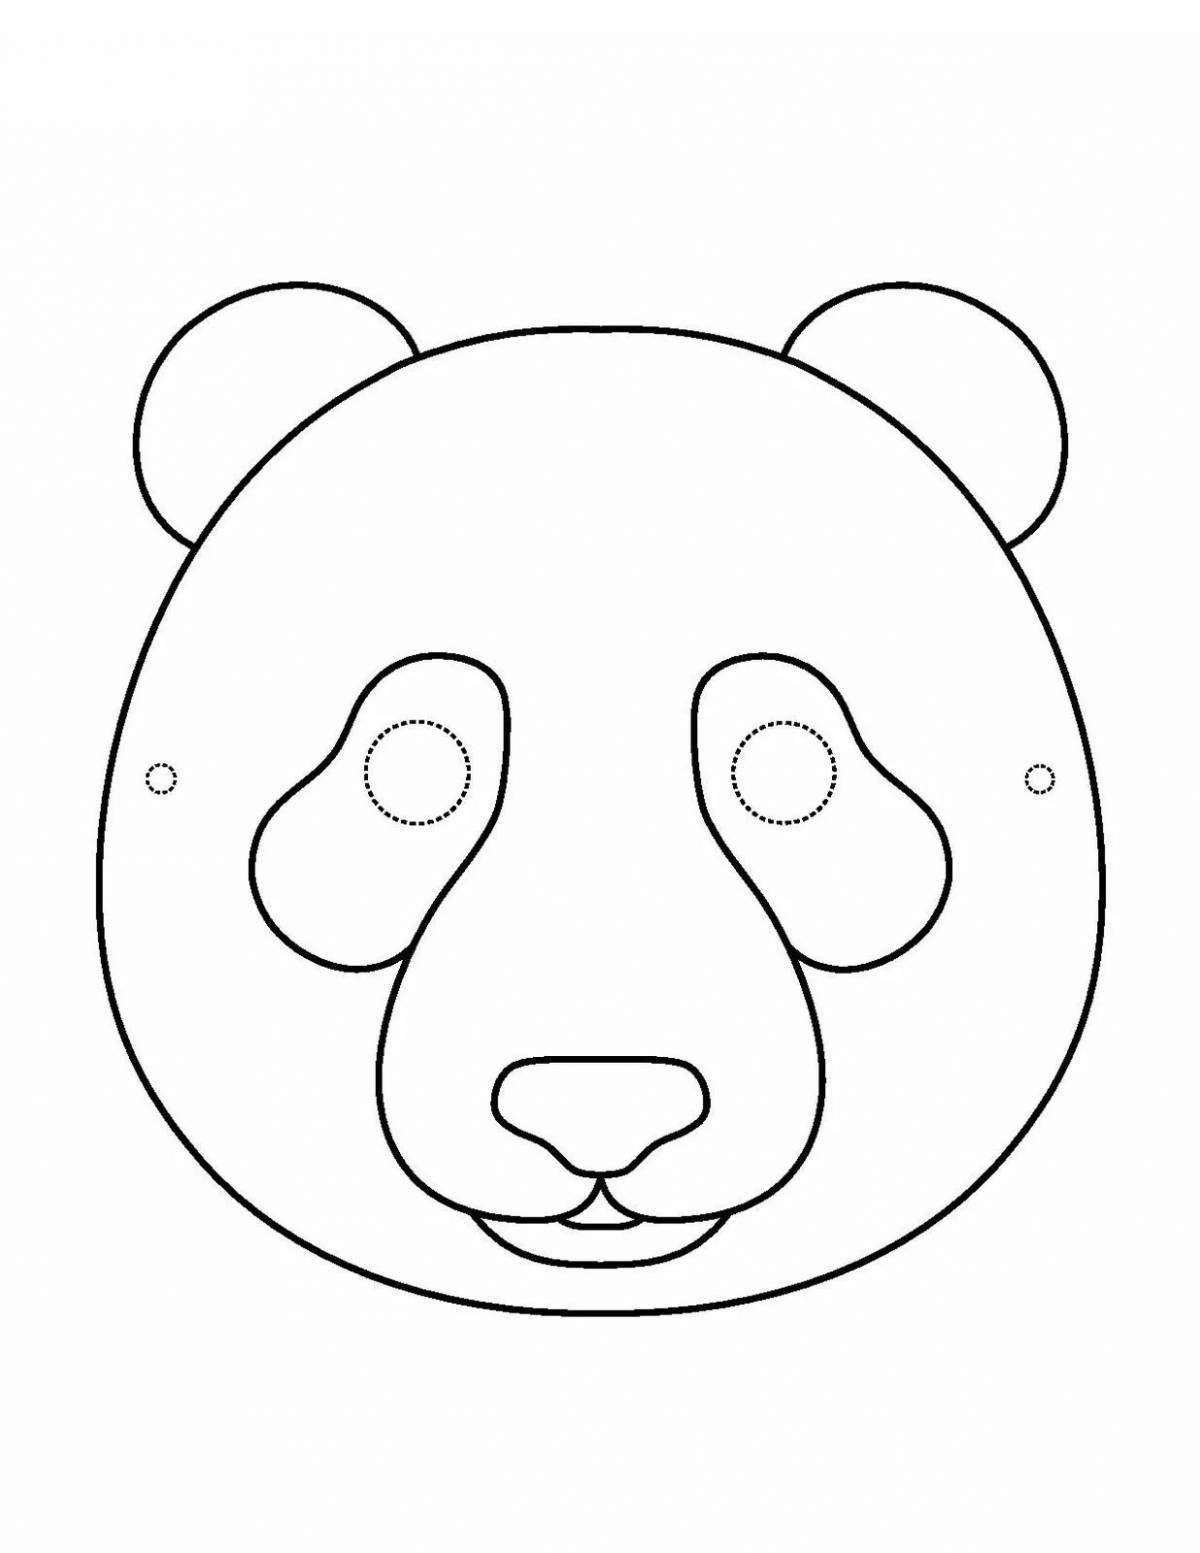 A funny bear head coloring book